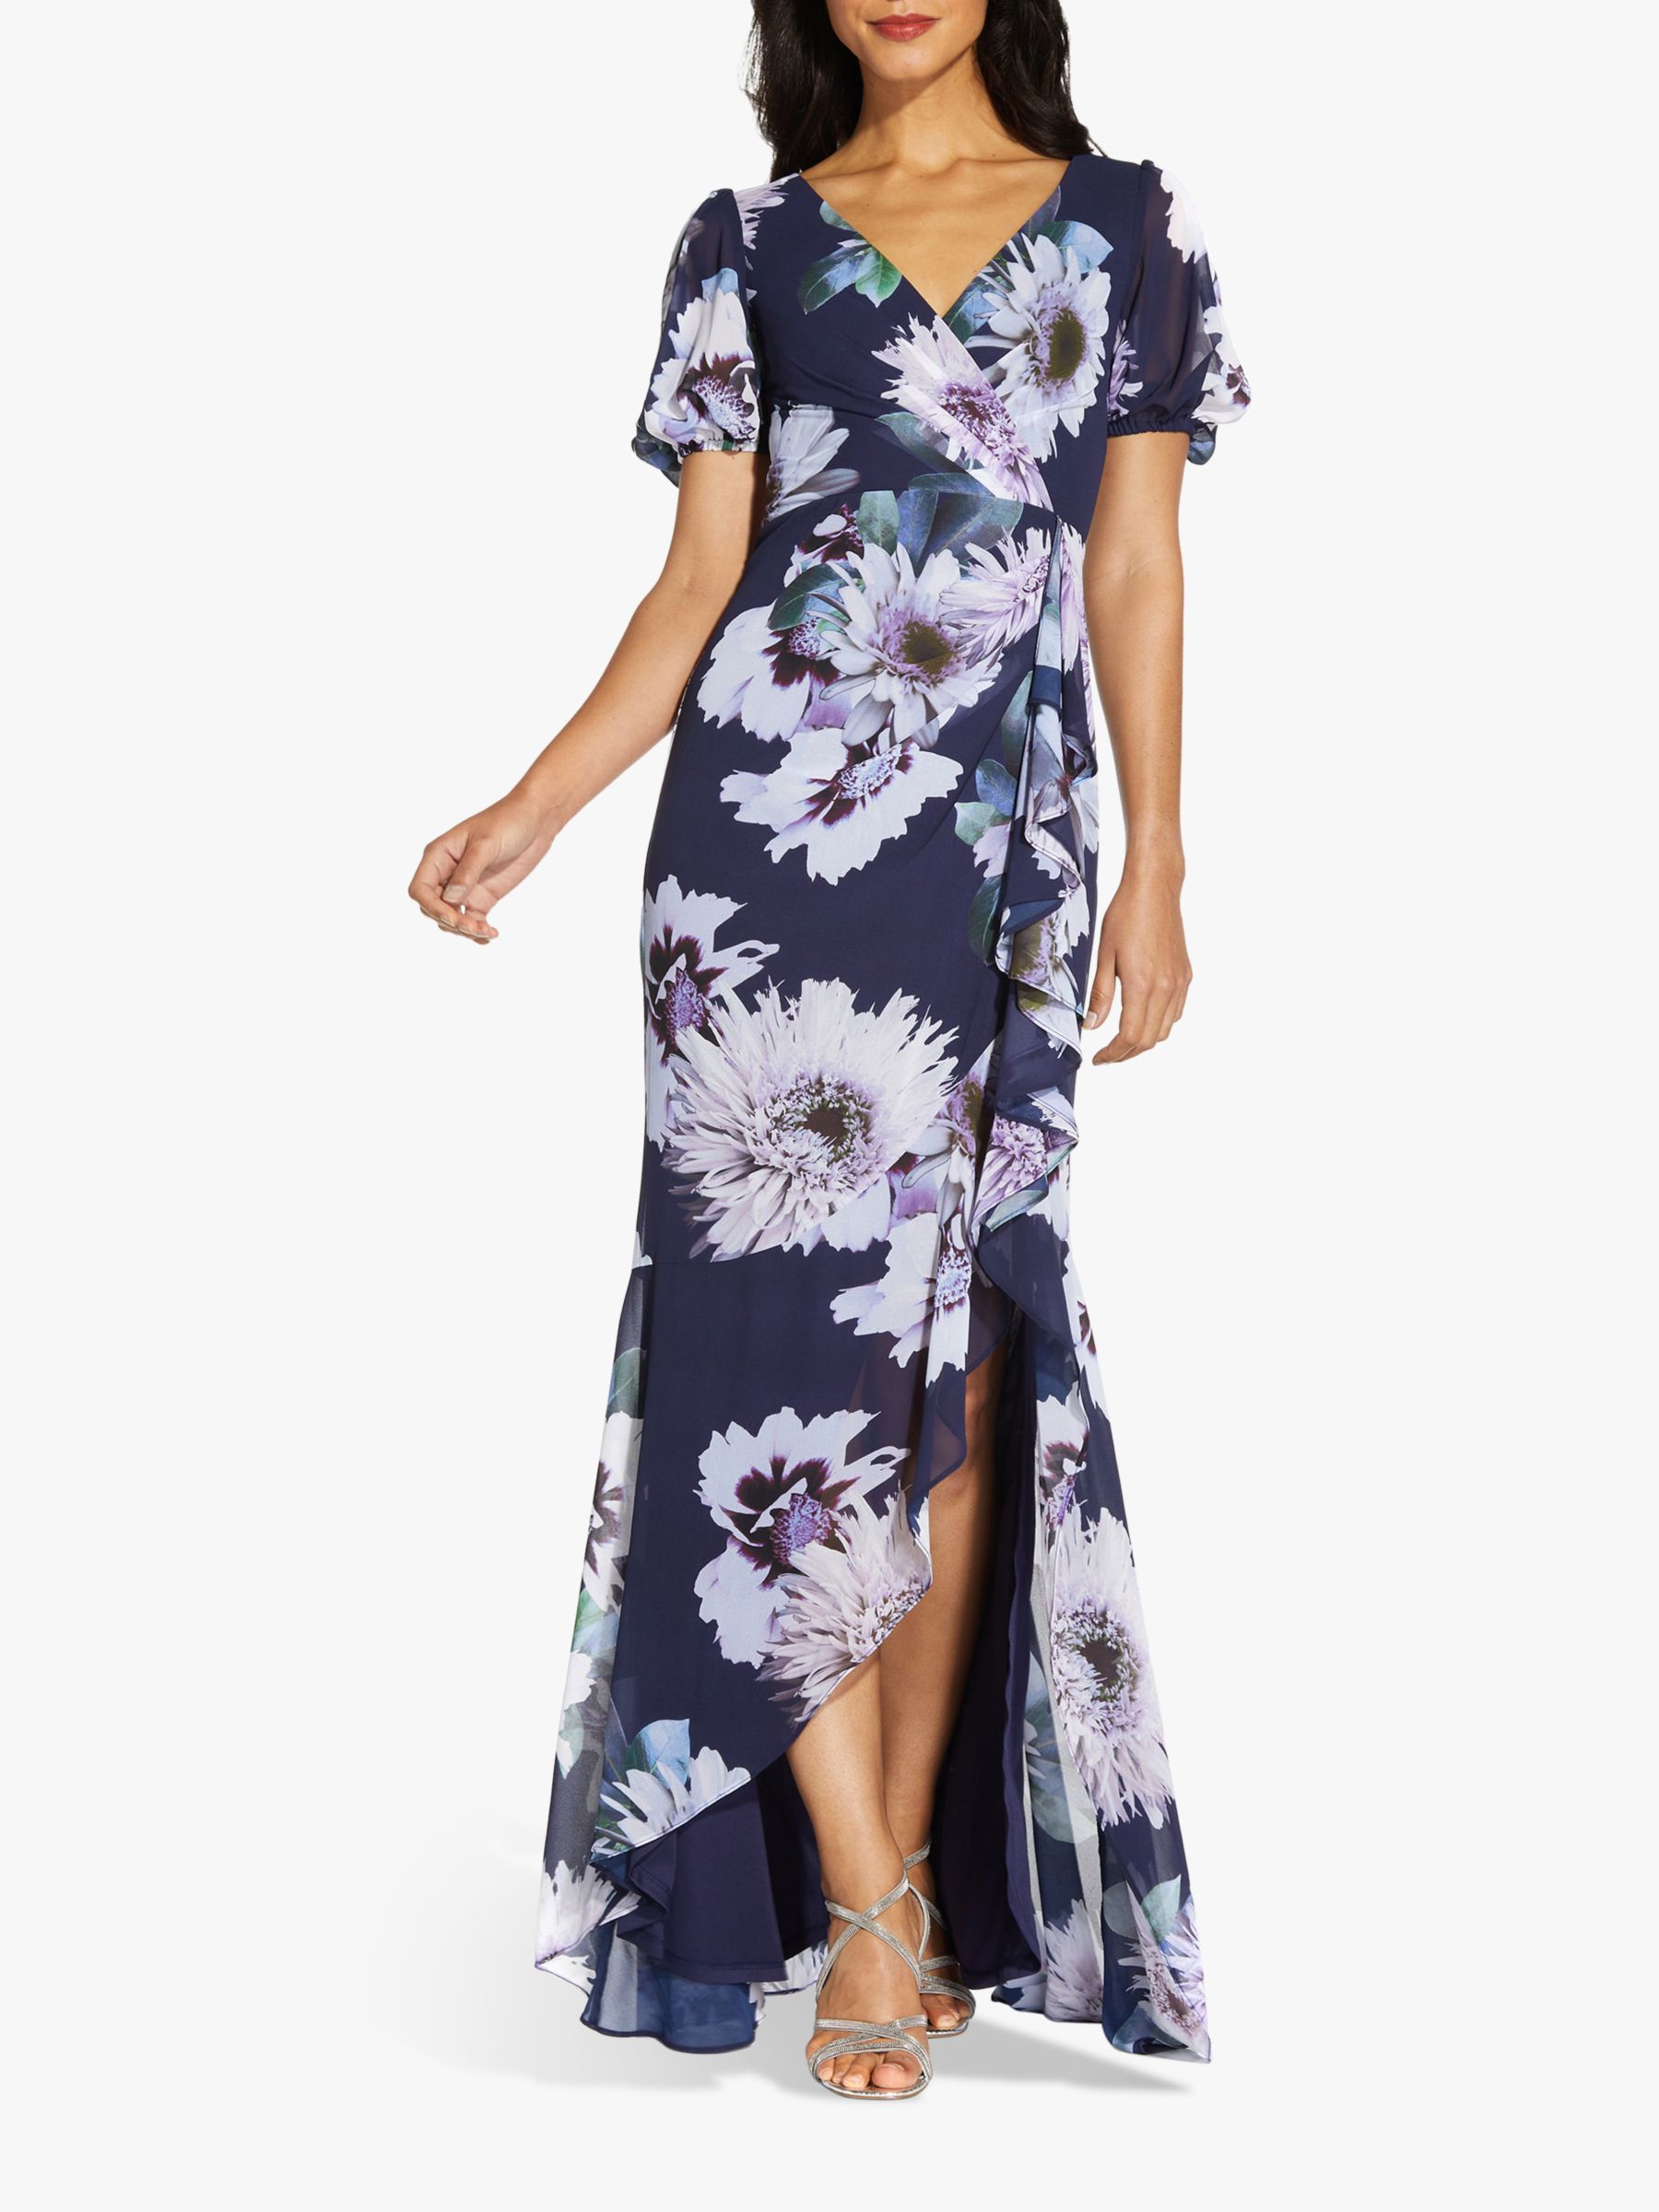 Adrianna Papell Chiffon Floral Maxi Dress, Midnight/Multi